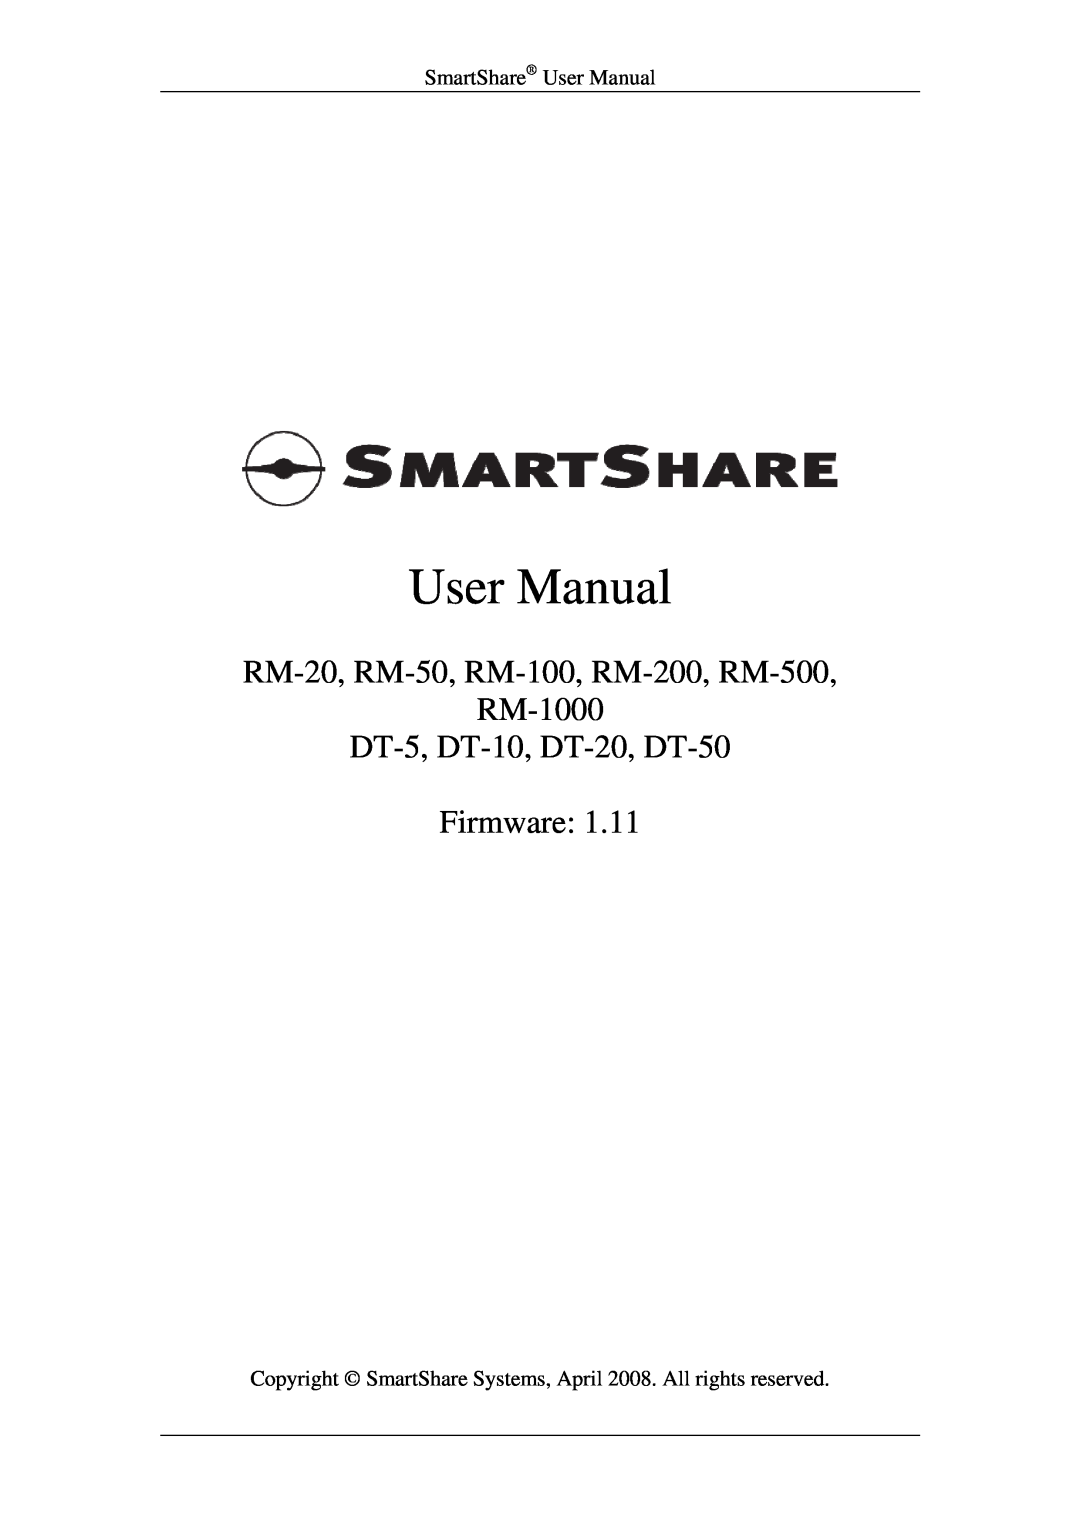 HP manual User Manual, RM-20, RM-50, RM-100, RM-200, RM-500 RM-1000, DT-5, DT-10, DT-20, DT-50 Firmware 